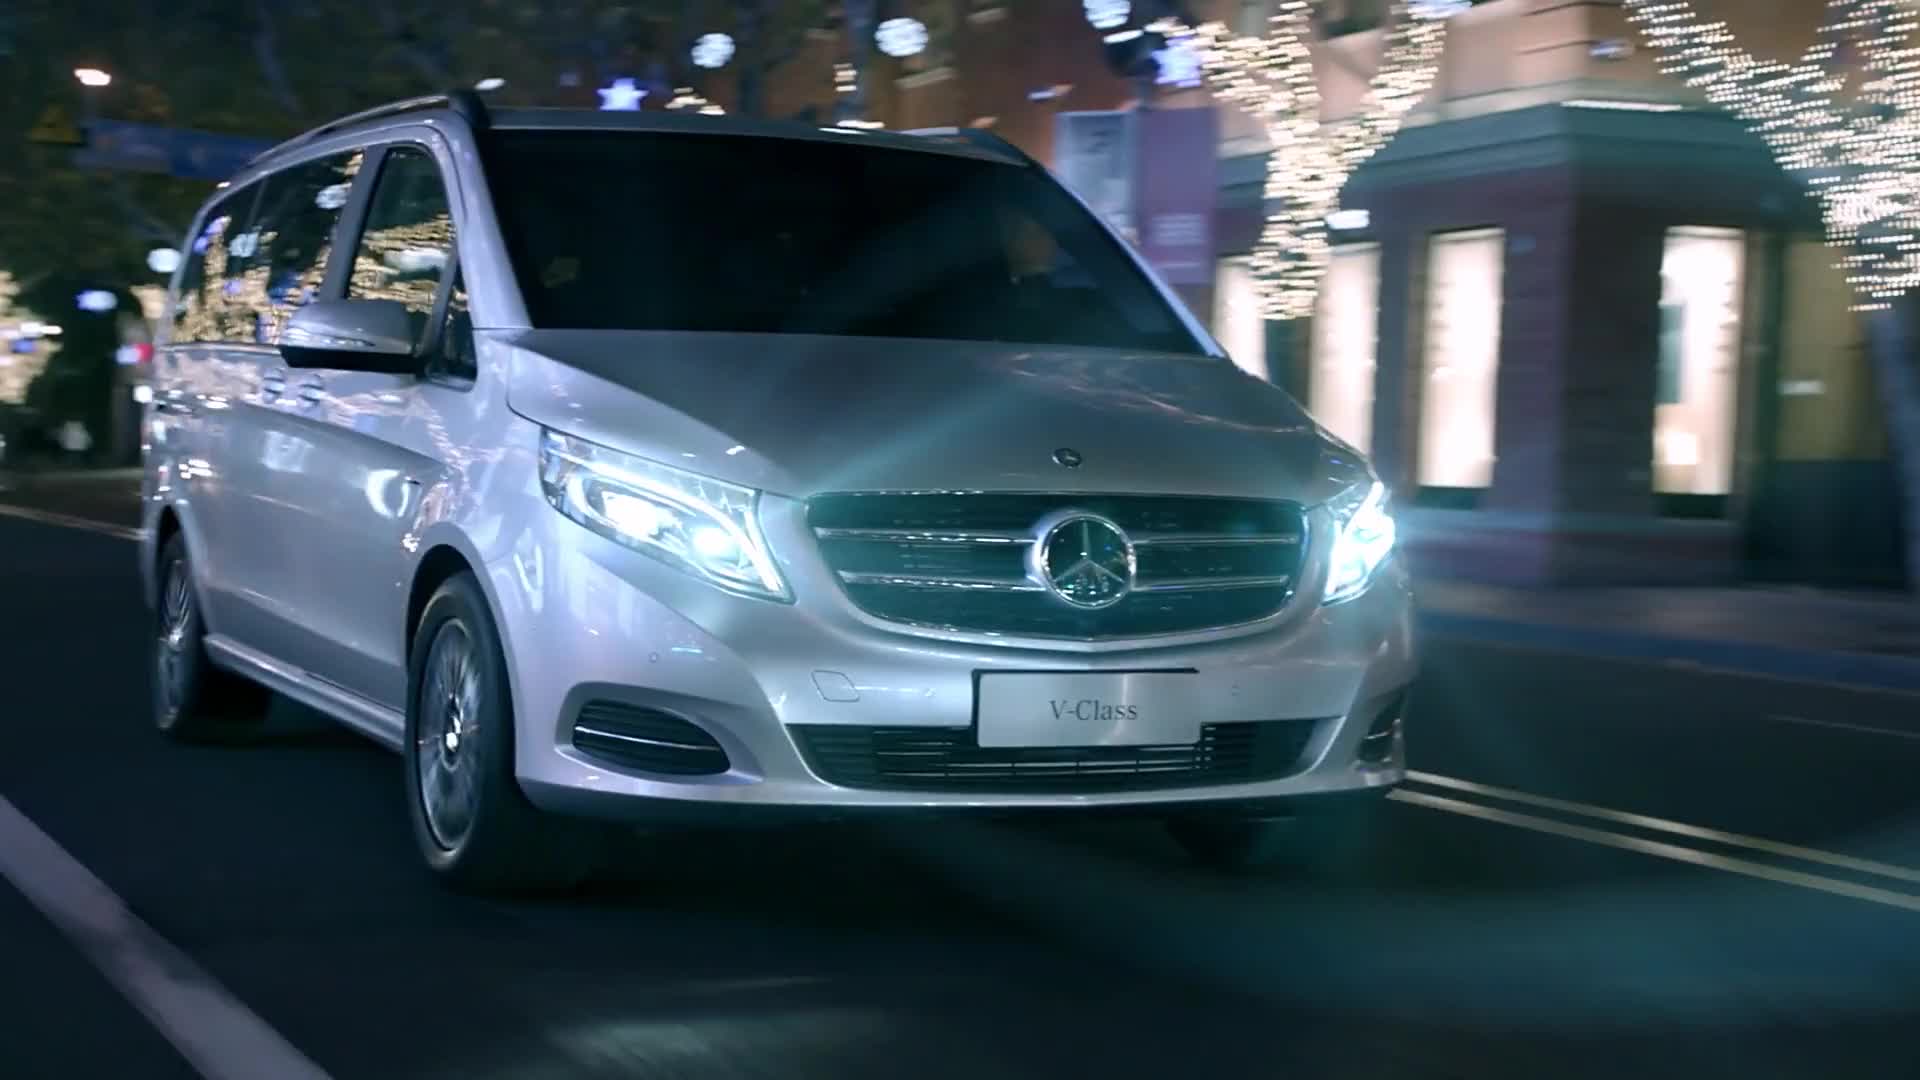 Mercedes Benz V Class